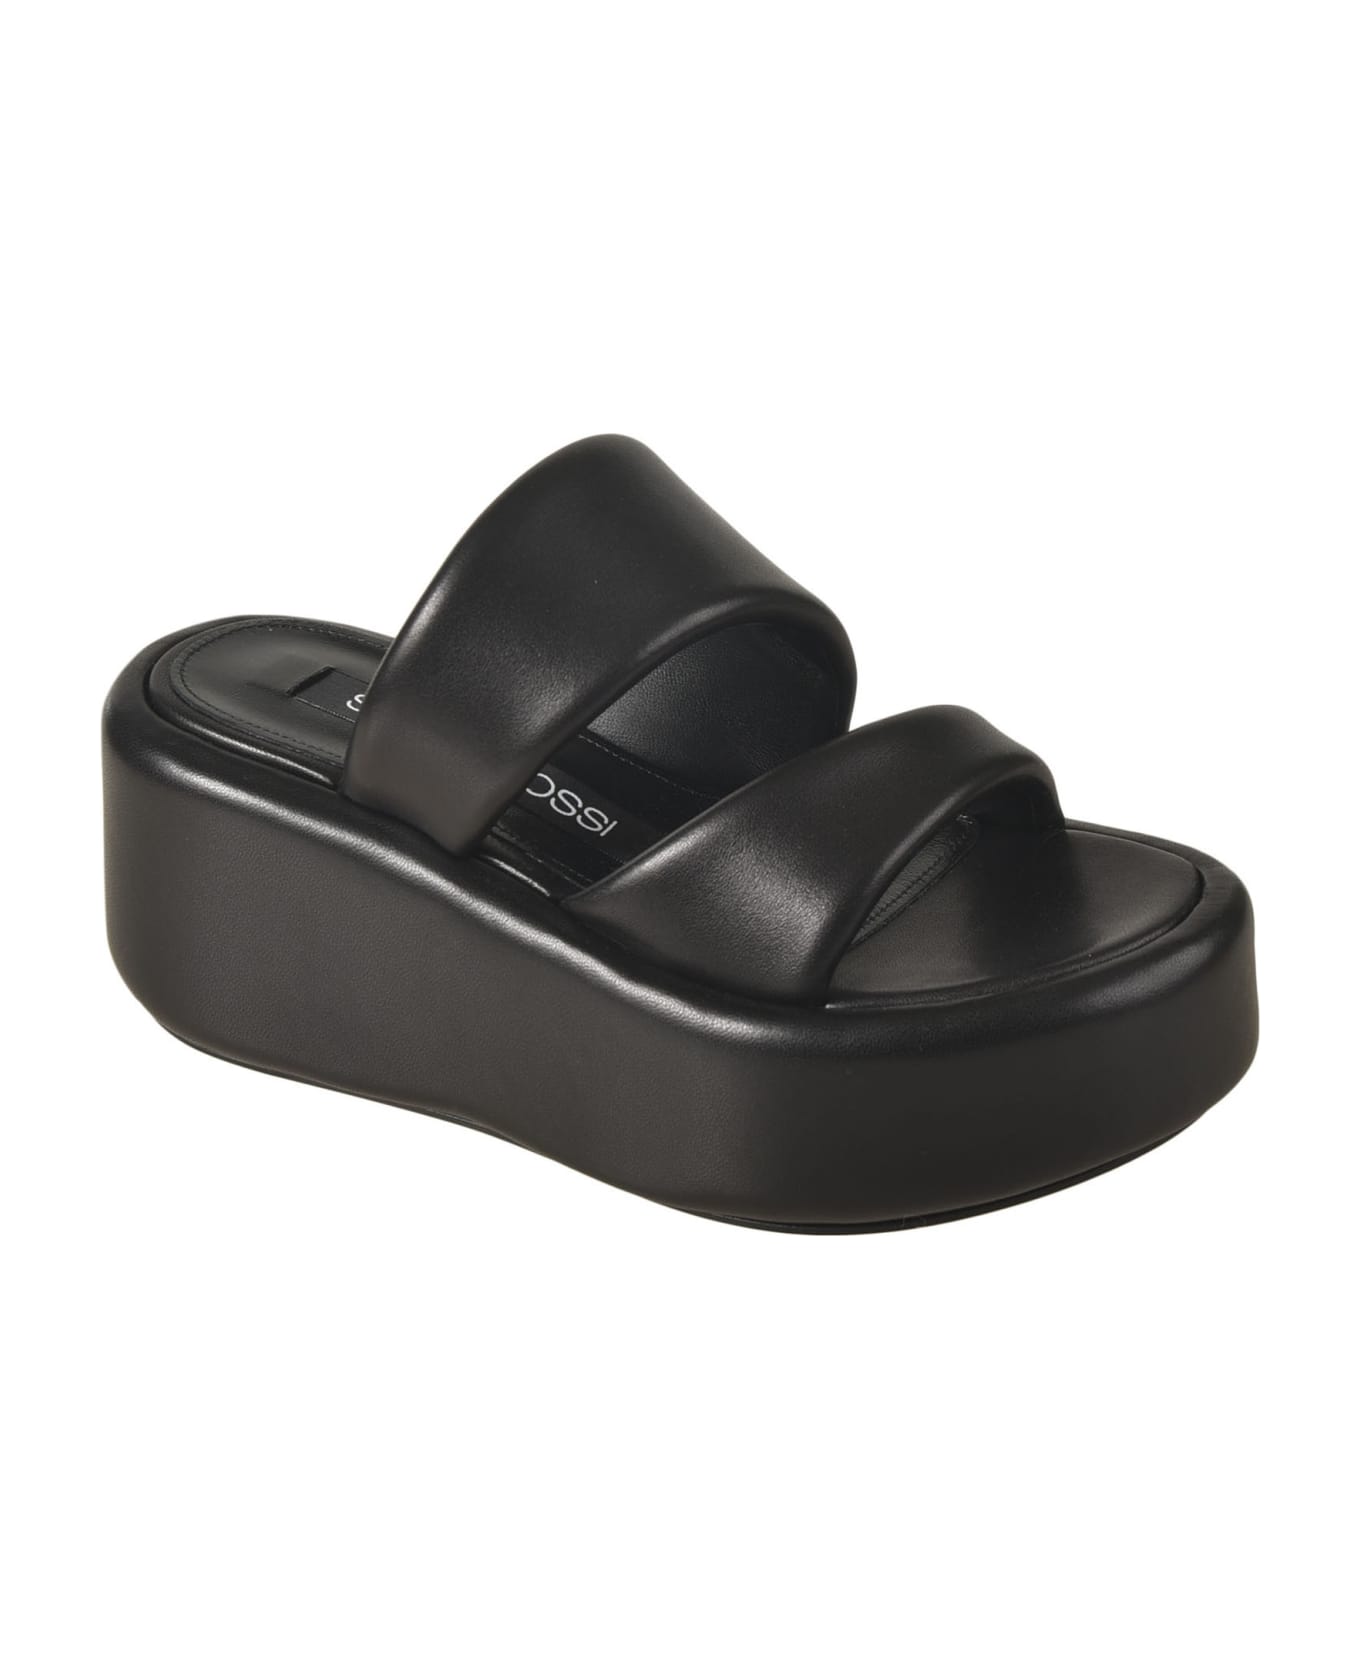 Sergio Rossi Spongy Wedge Sandals - Black